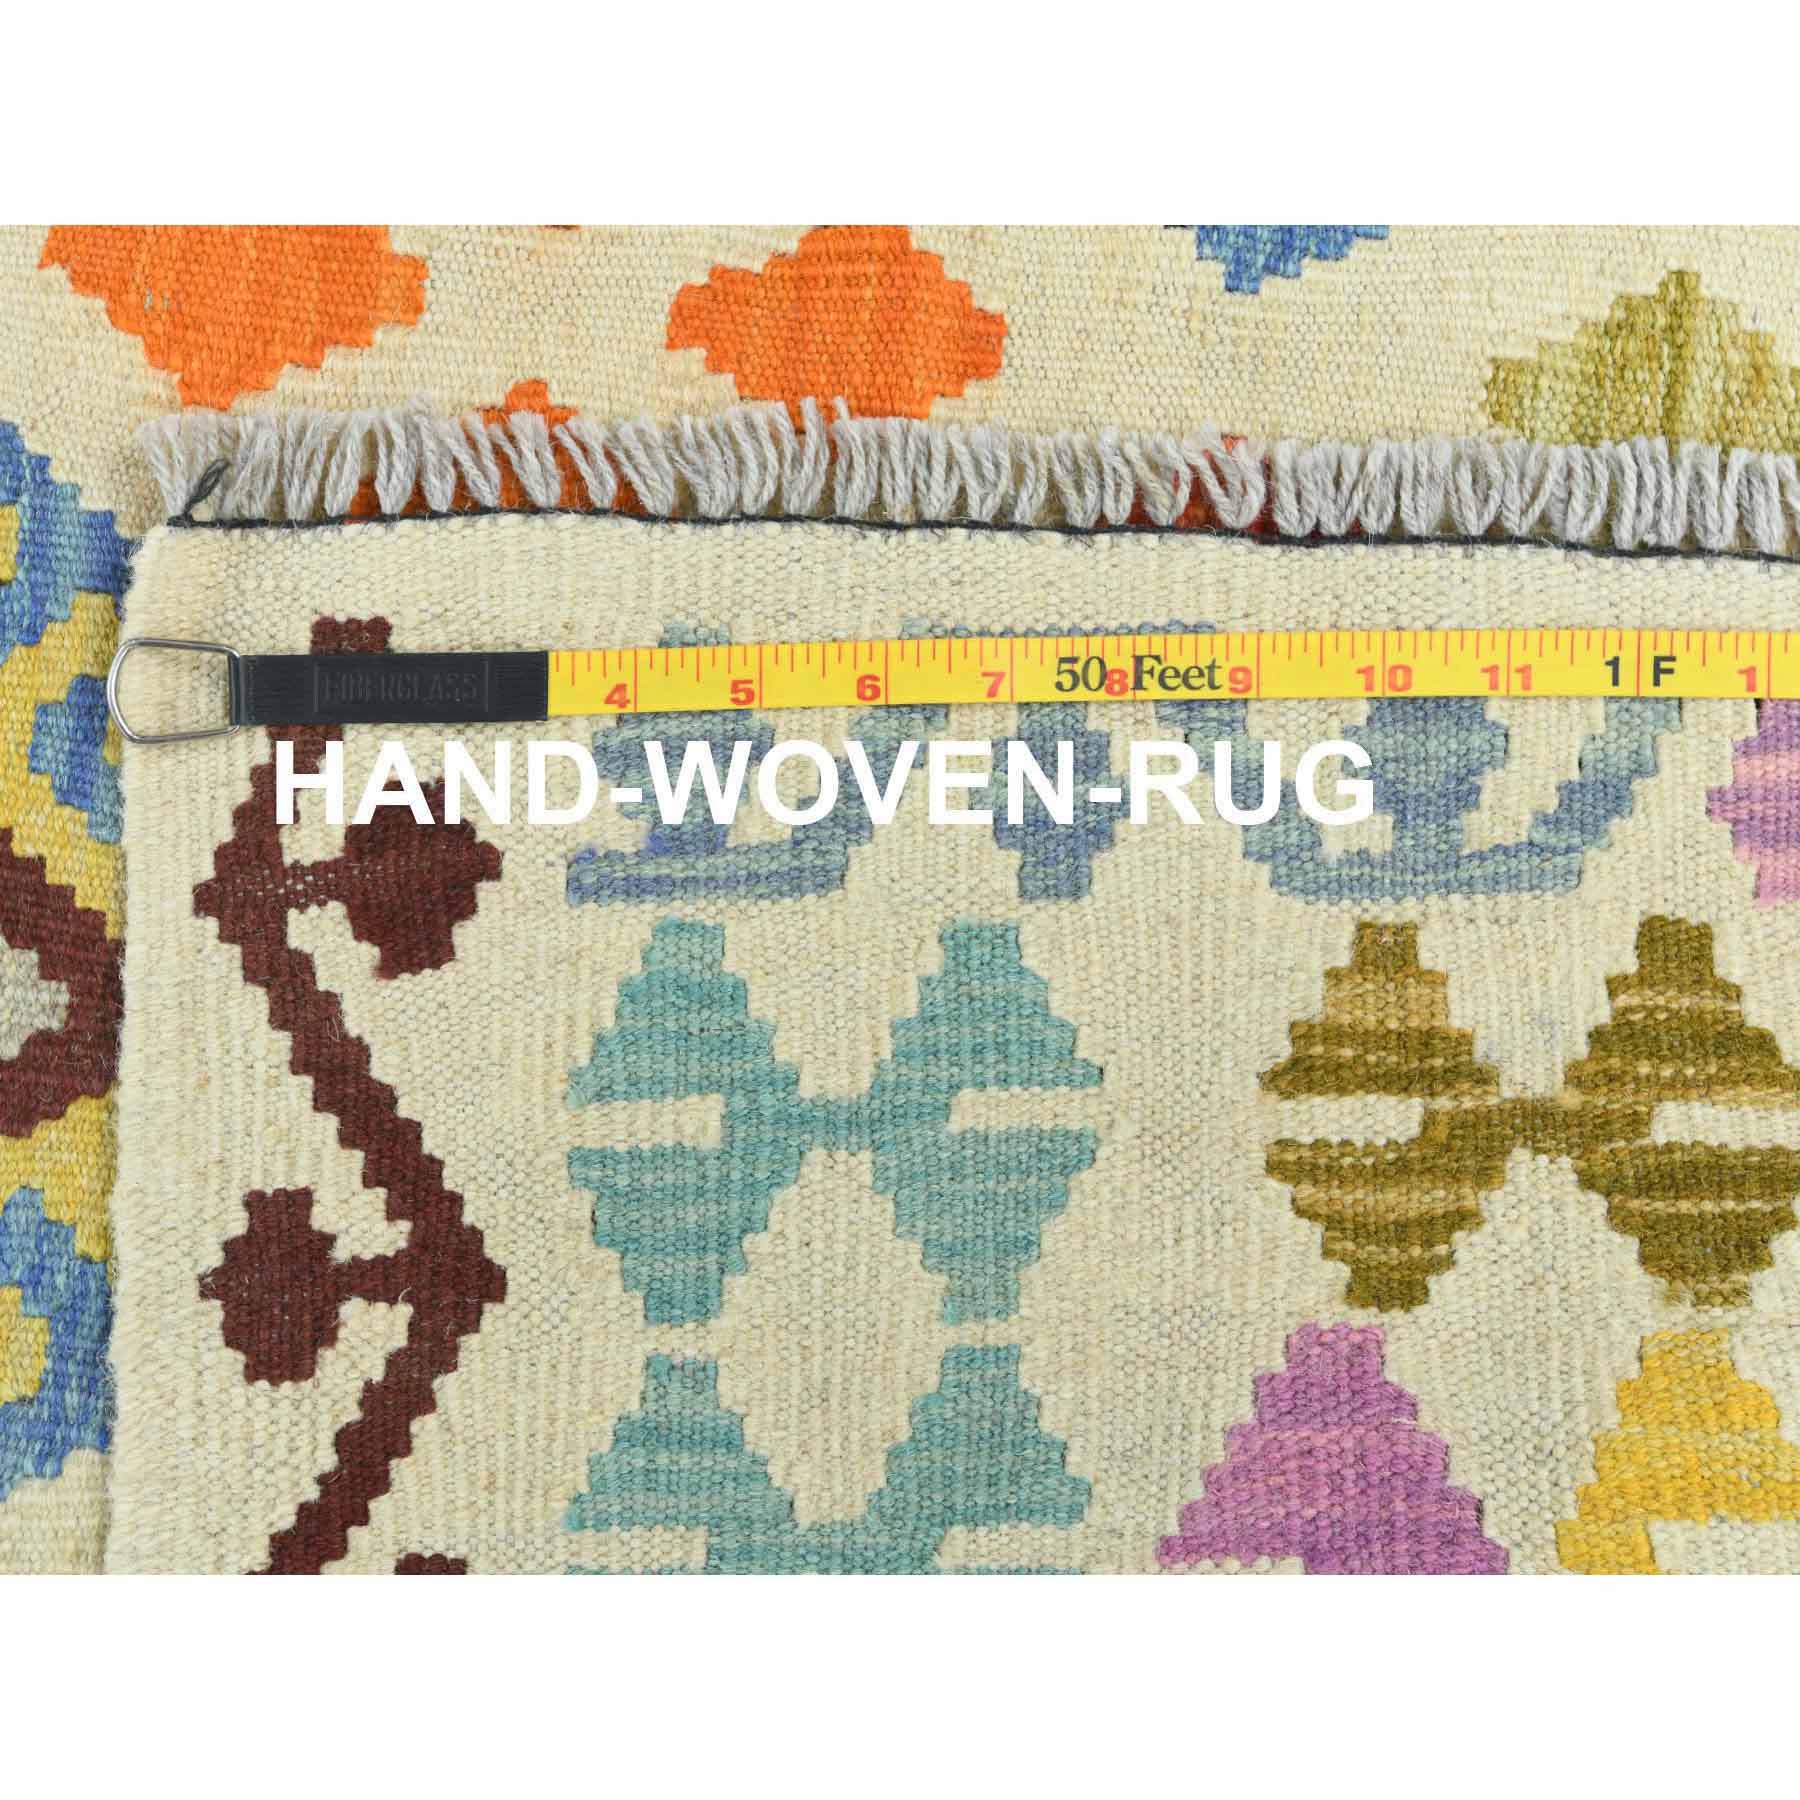 Flat-Weave-Hand-Woven-Rug-411200